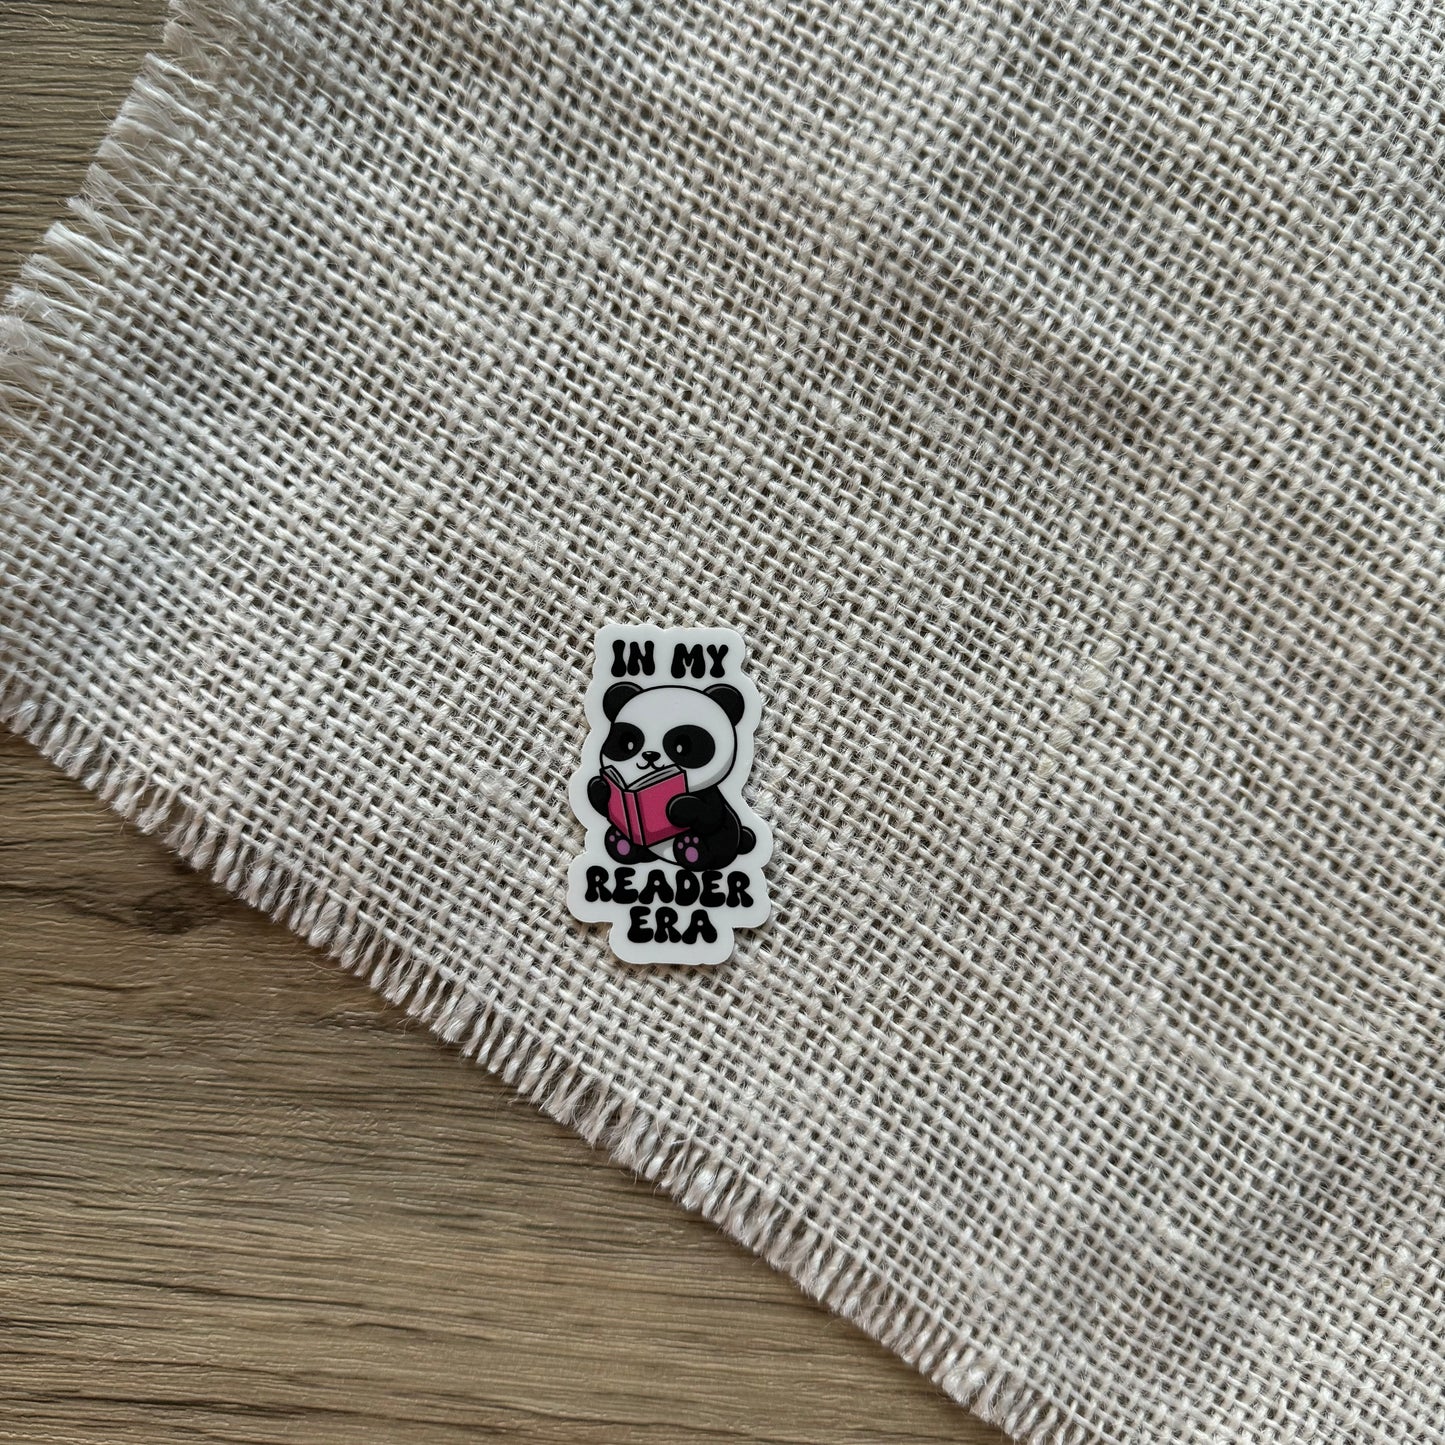 Reader Era| In my panda bear era| kawaii cutesy pink bookish adorable gift for her| waterproof vinyl sticker| perfect for kindle, water bottle, laptop, iPad & more!